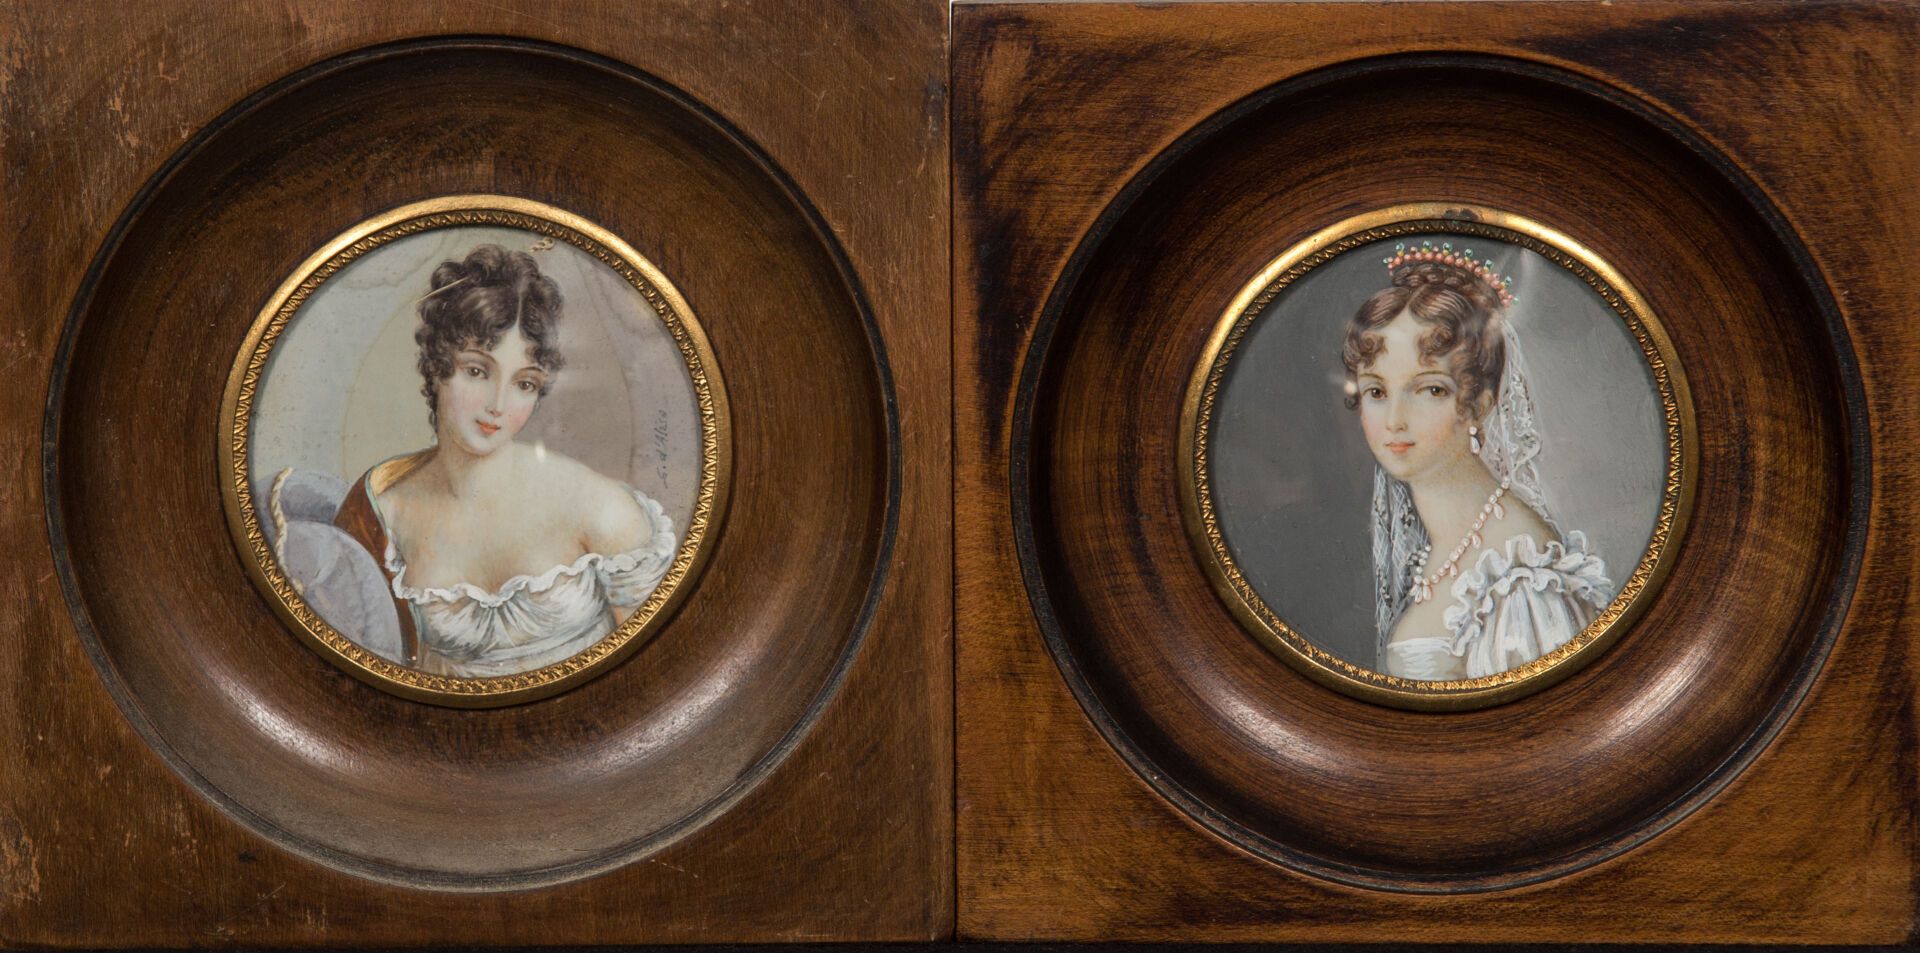 Null 20世纪的法国学校。

妇女的肖像。

两个关于cellulo的微型画。

长5.5厘米，其中一个有轻微污点